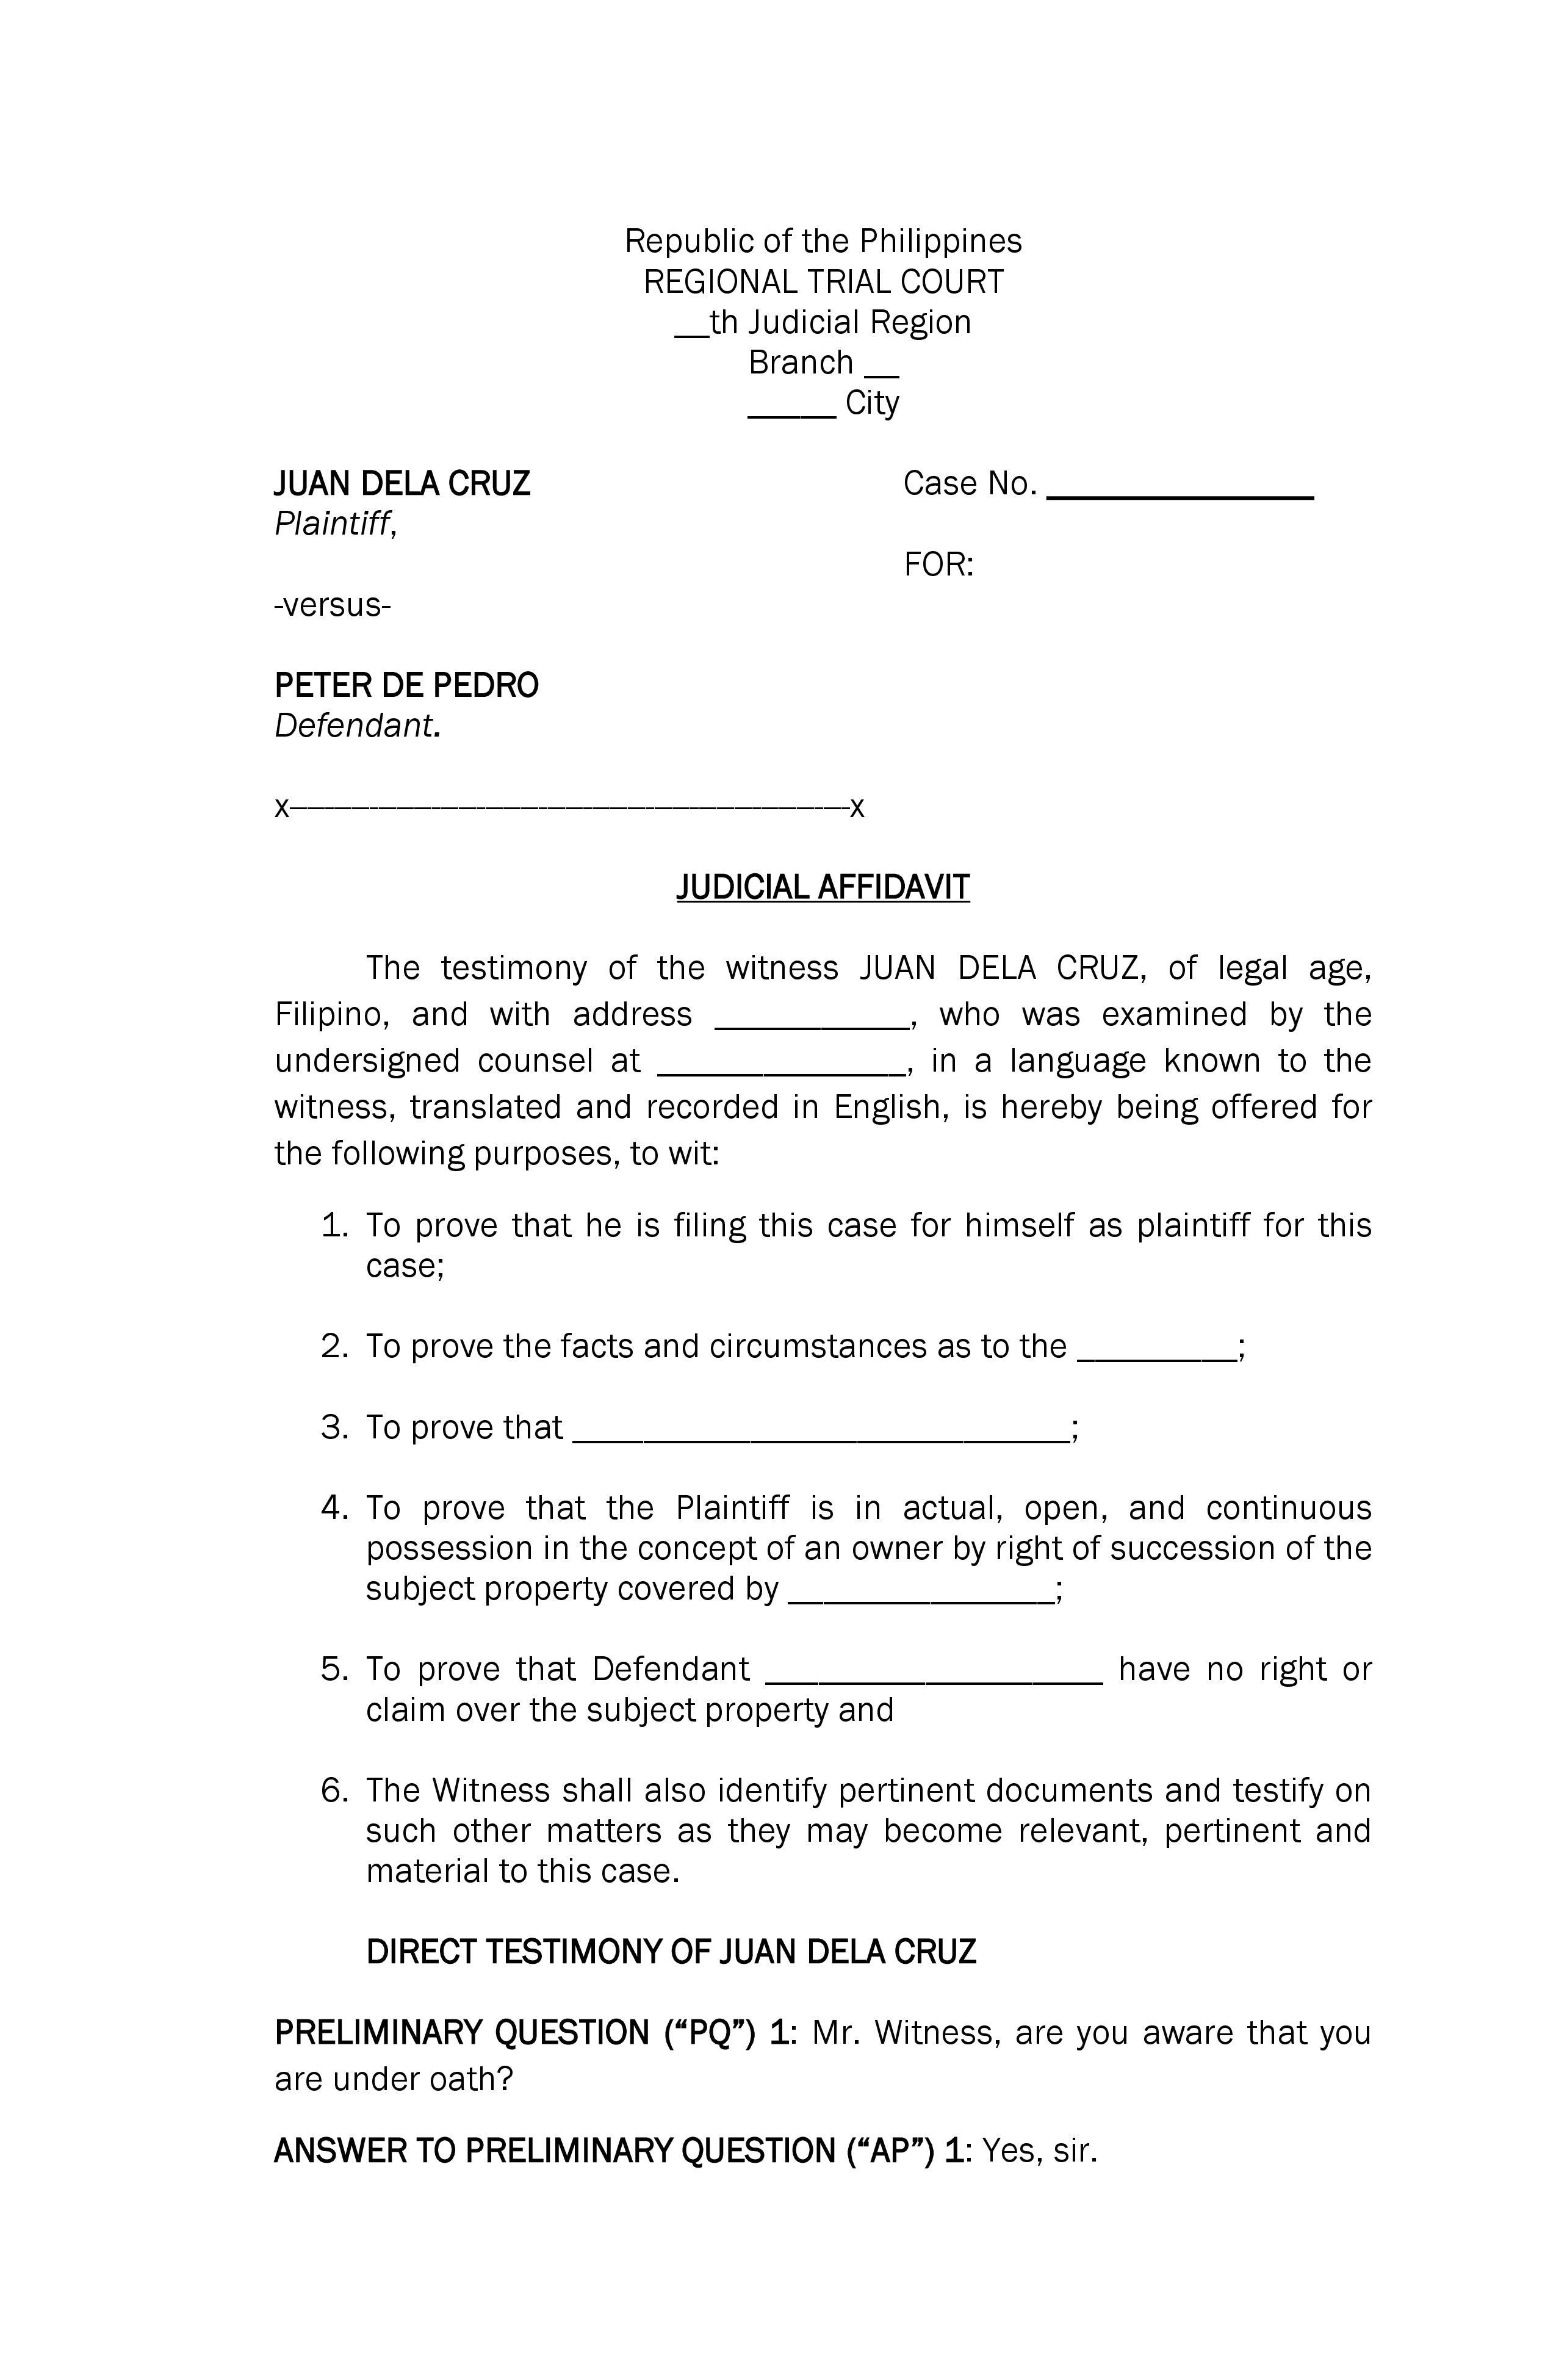 Judicial Affidavit page one